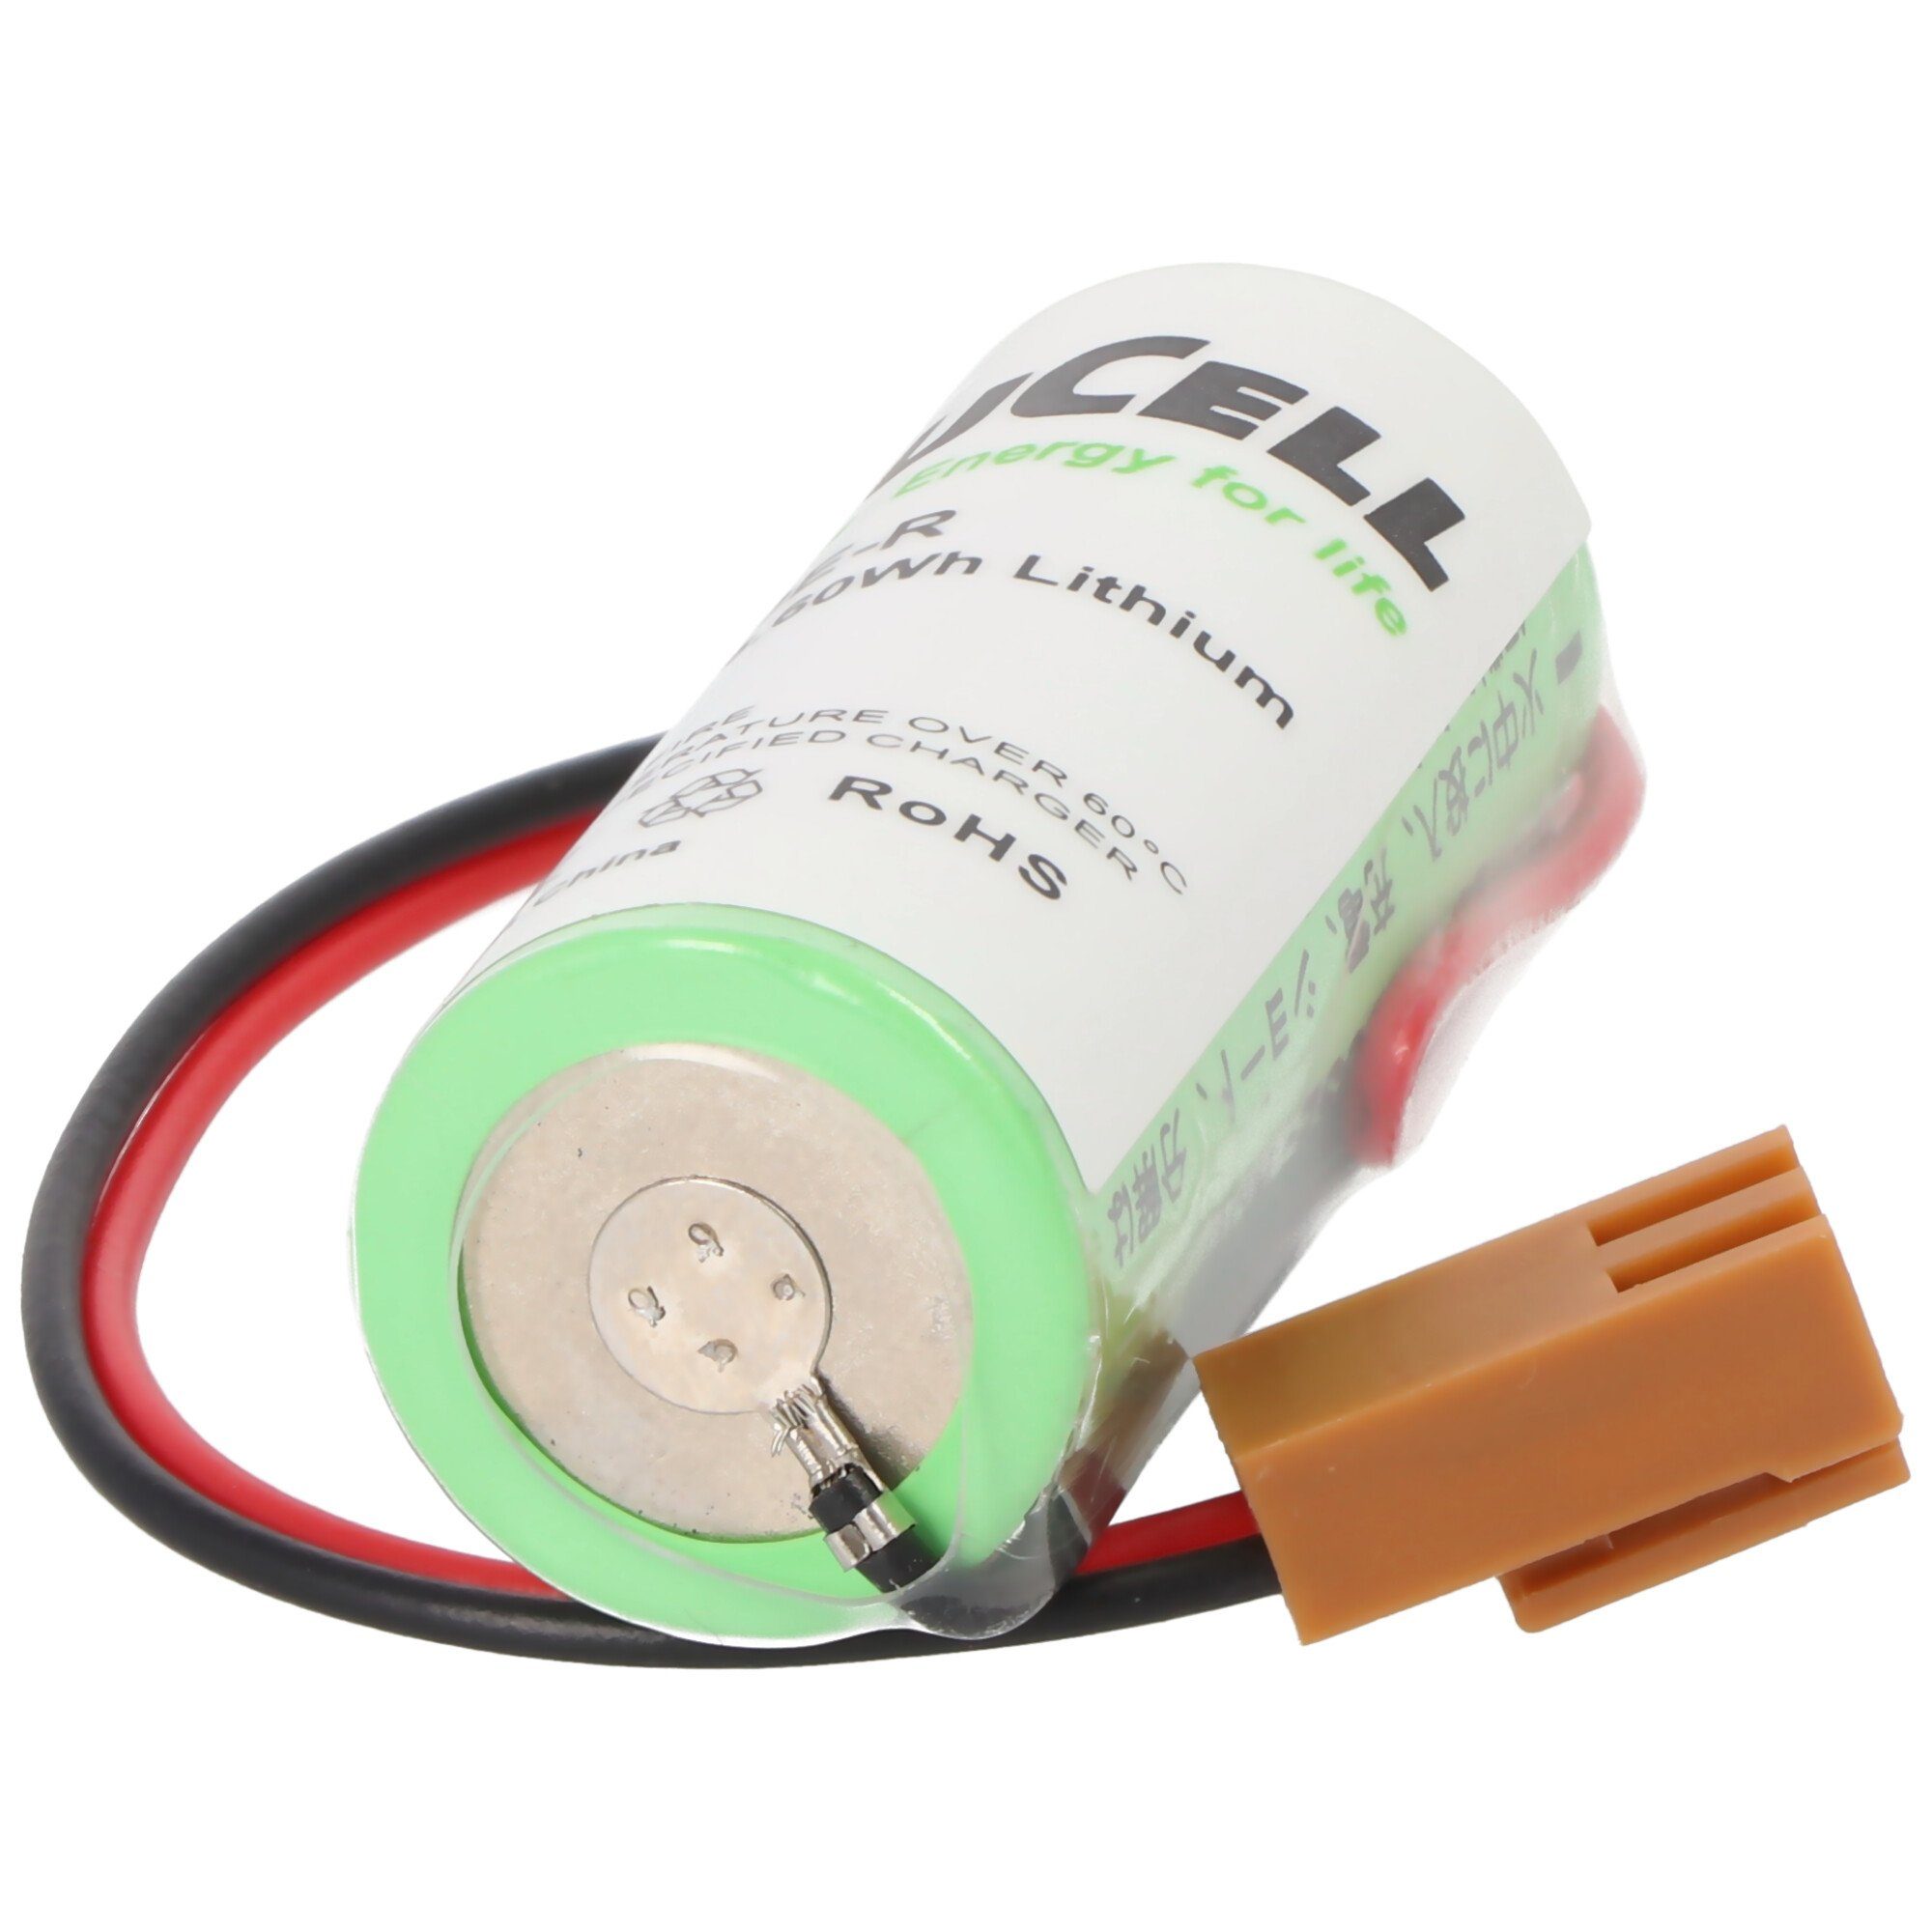 Sanyo Lithium Batterie CR17450E-R Size (3,0 LX98L-0031-0012, St A, mit und Kabel Batterie, V)